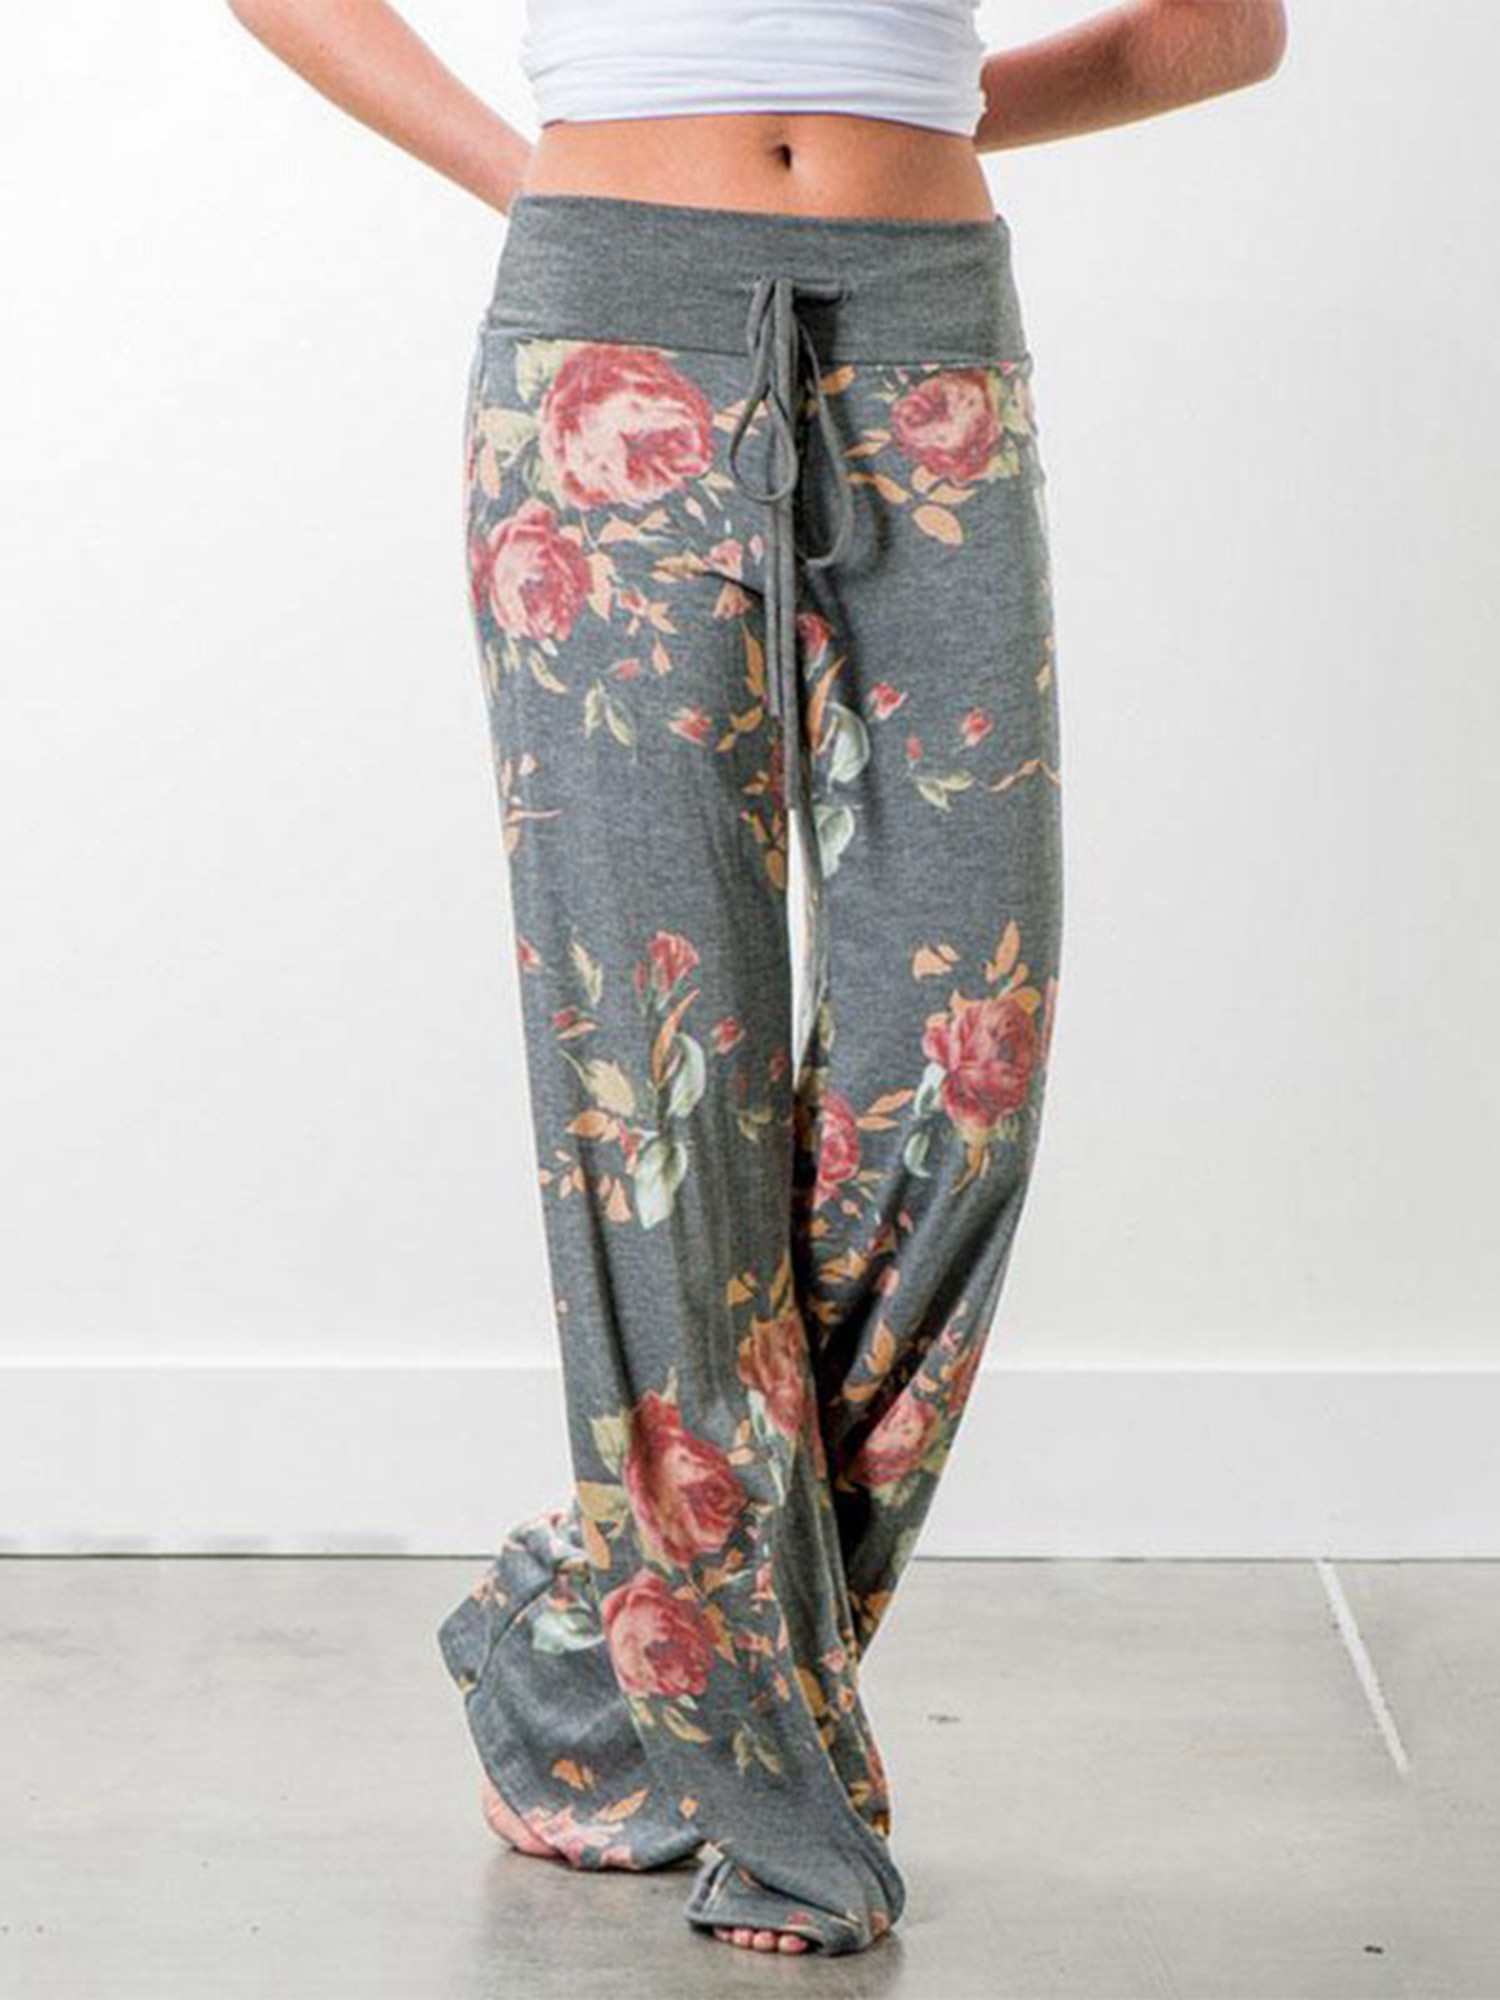 AMiERY Women's Comfy Casual Pajama Pants Floral Print Drawstring